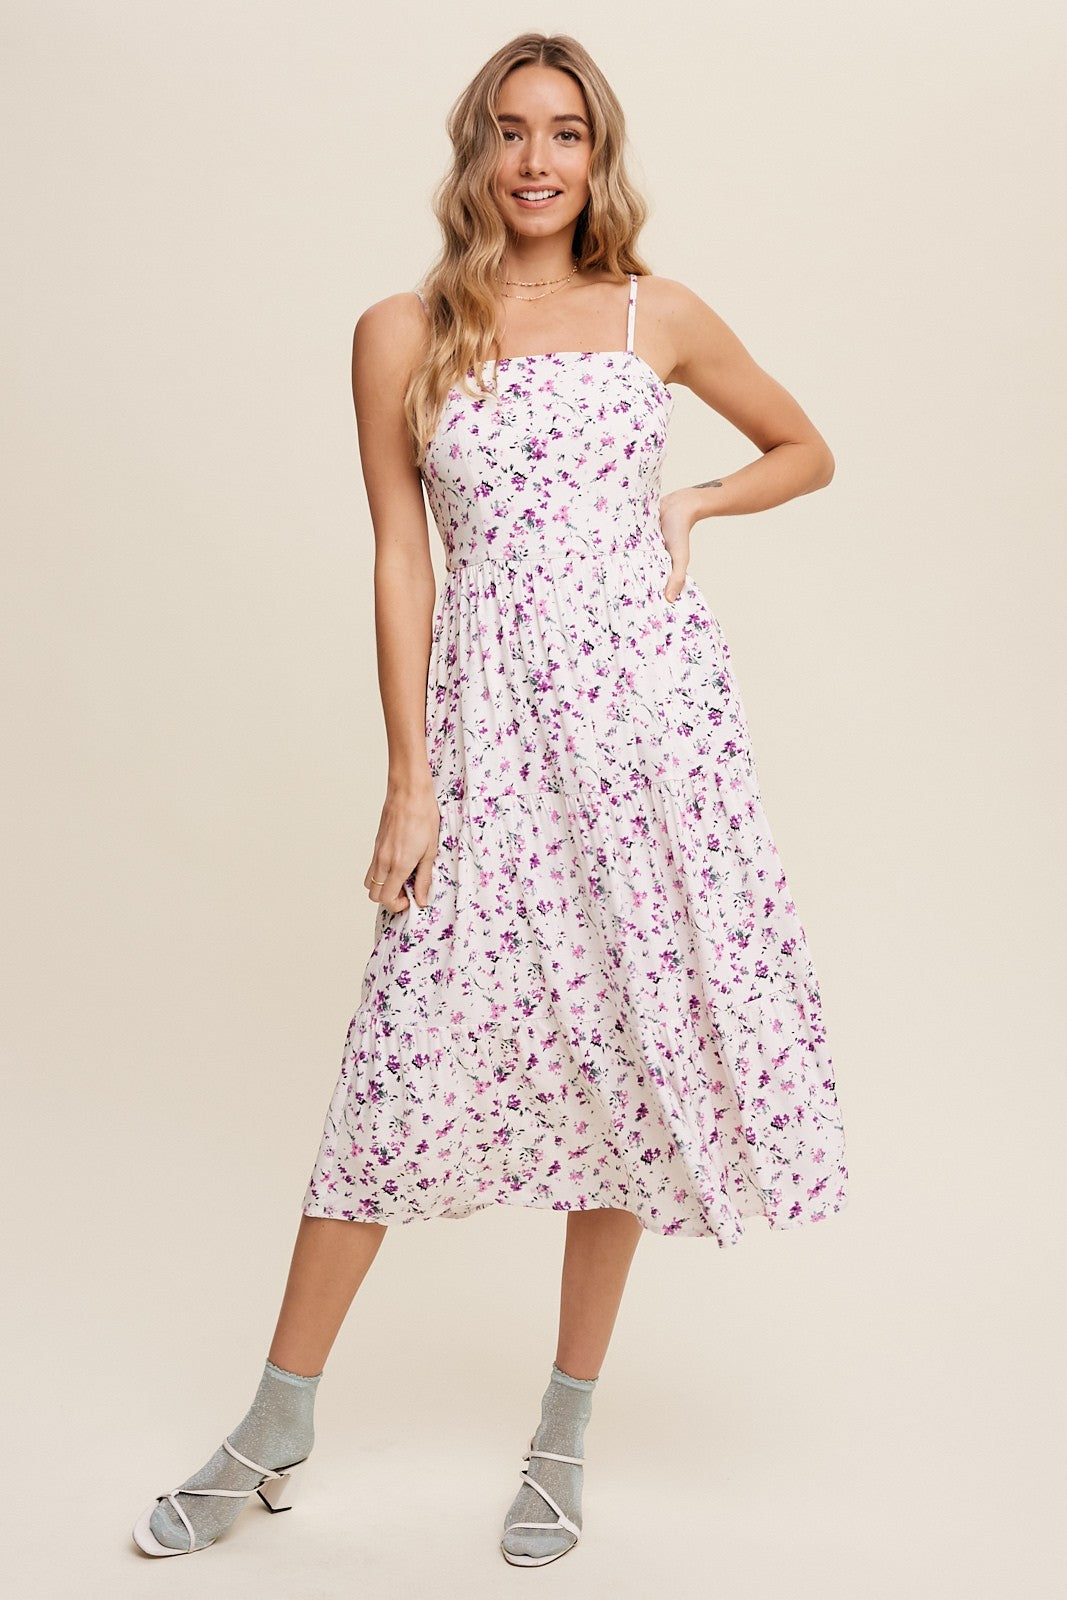 Lavender Floral Print Square Neck A-Line Skirt Midi Dress